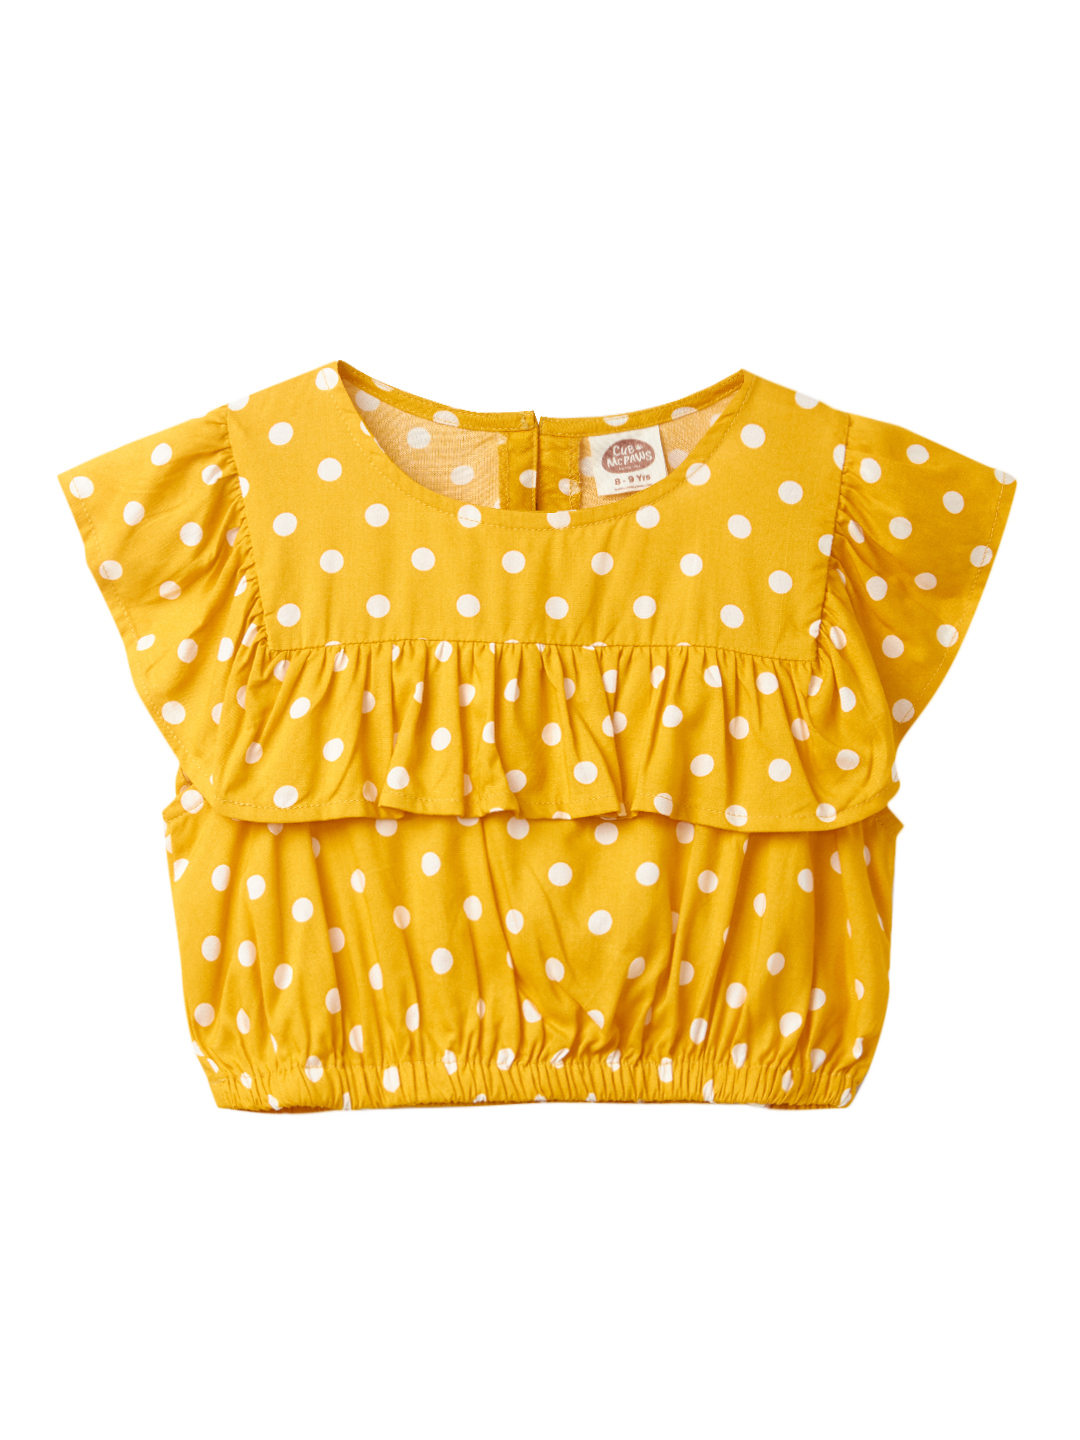 Girls Rayon Fashion Top,Yellow